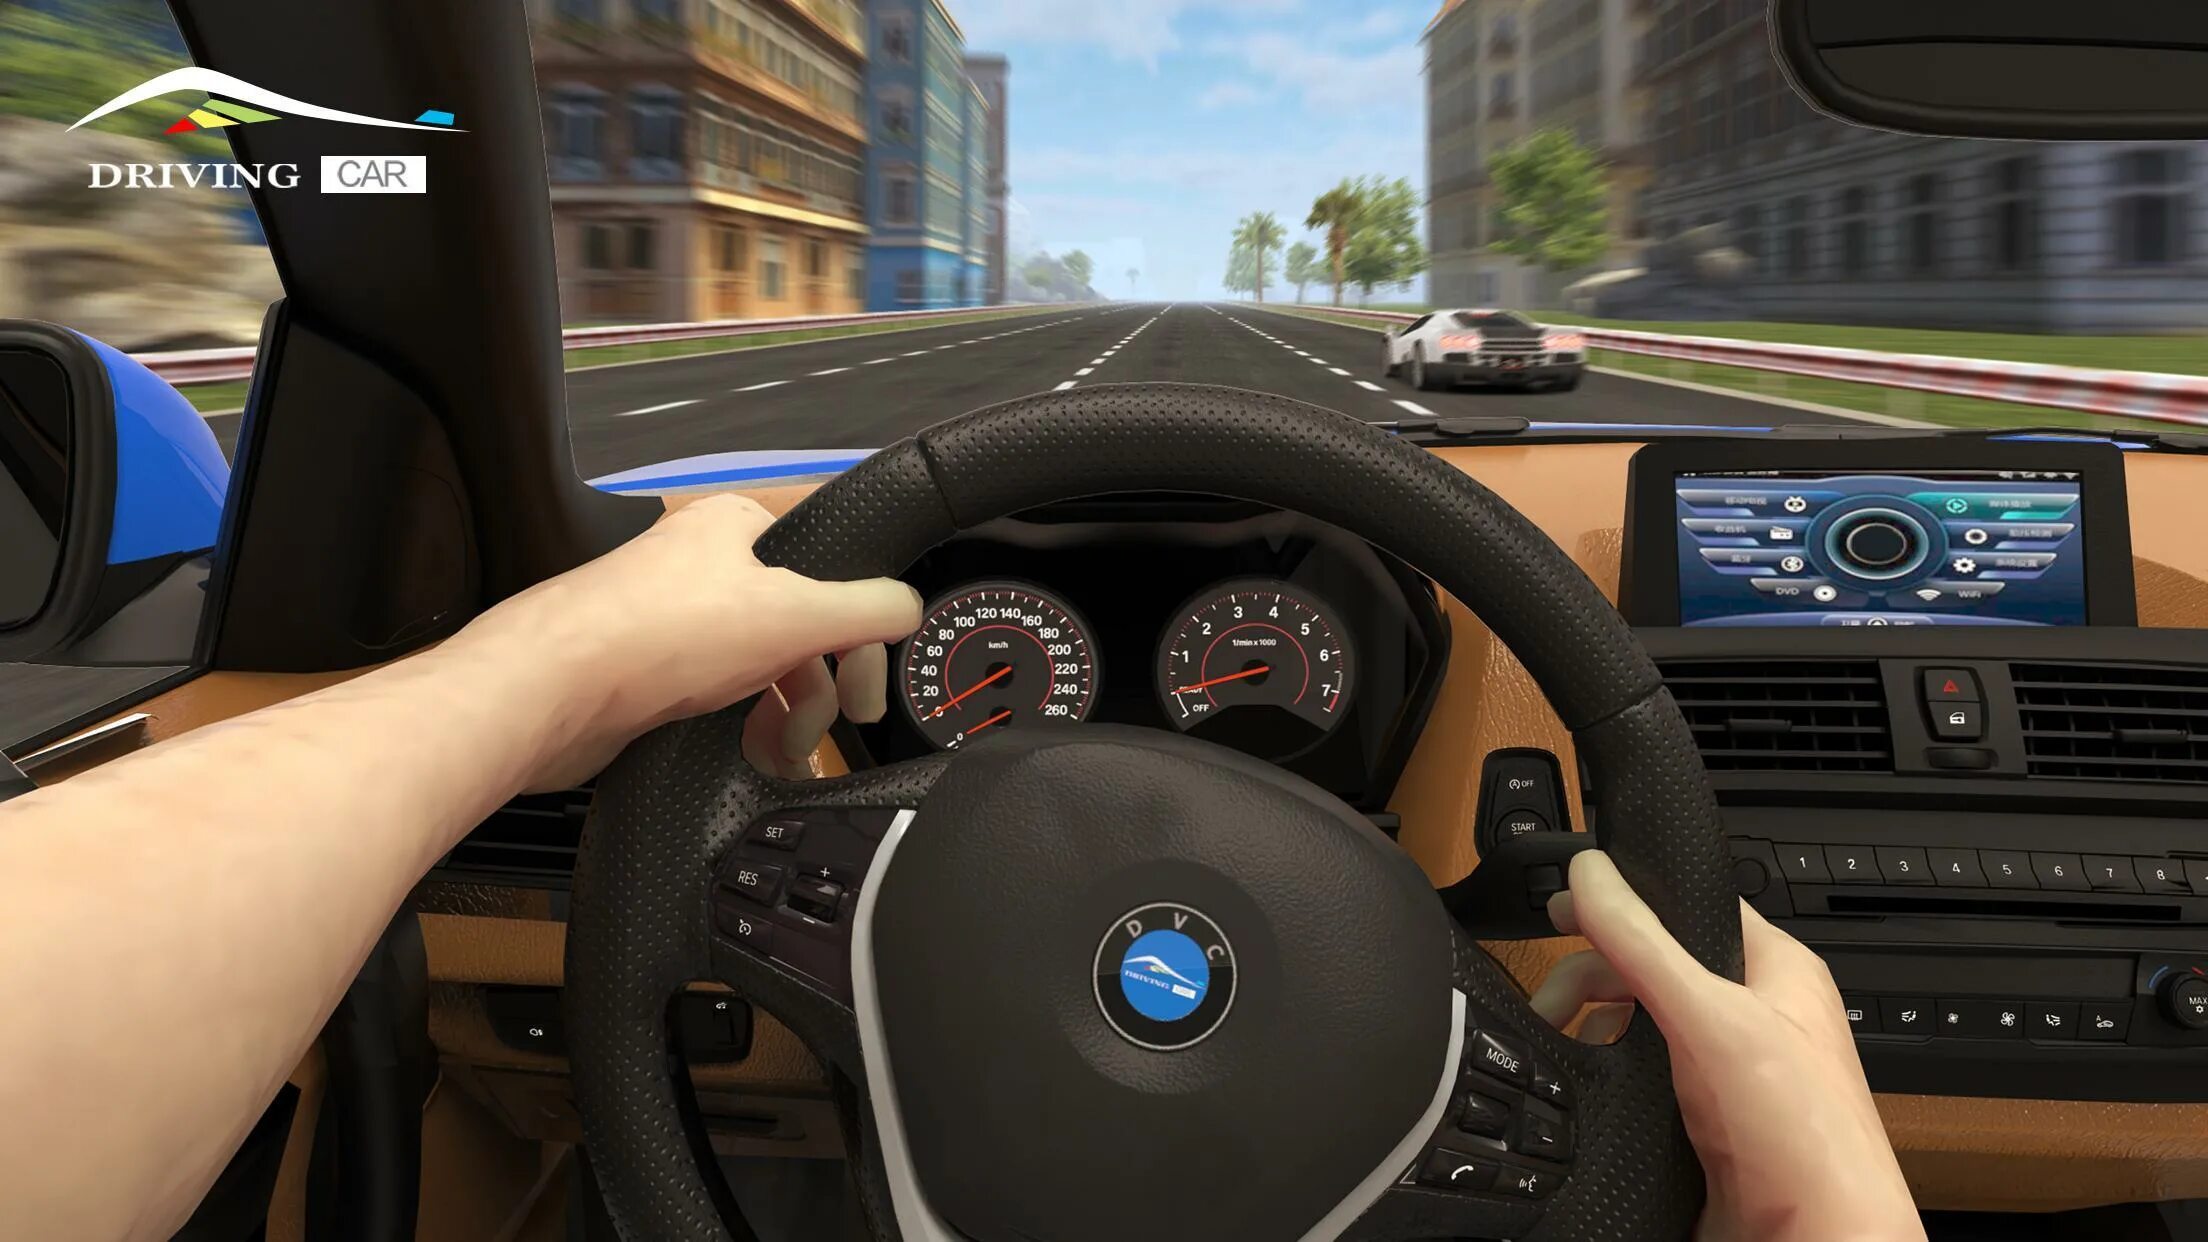 Off car driving game. Симулятор вождения. Car Driving School Simulator на компьютере. Симулятор вождения ВАЗ 2108. Car Driver game Android 2013.